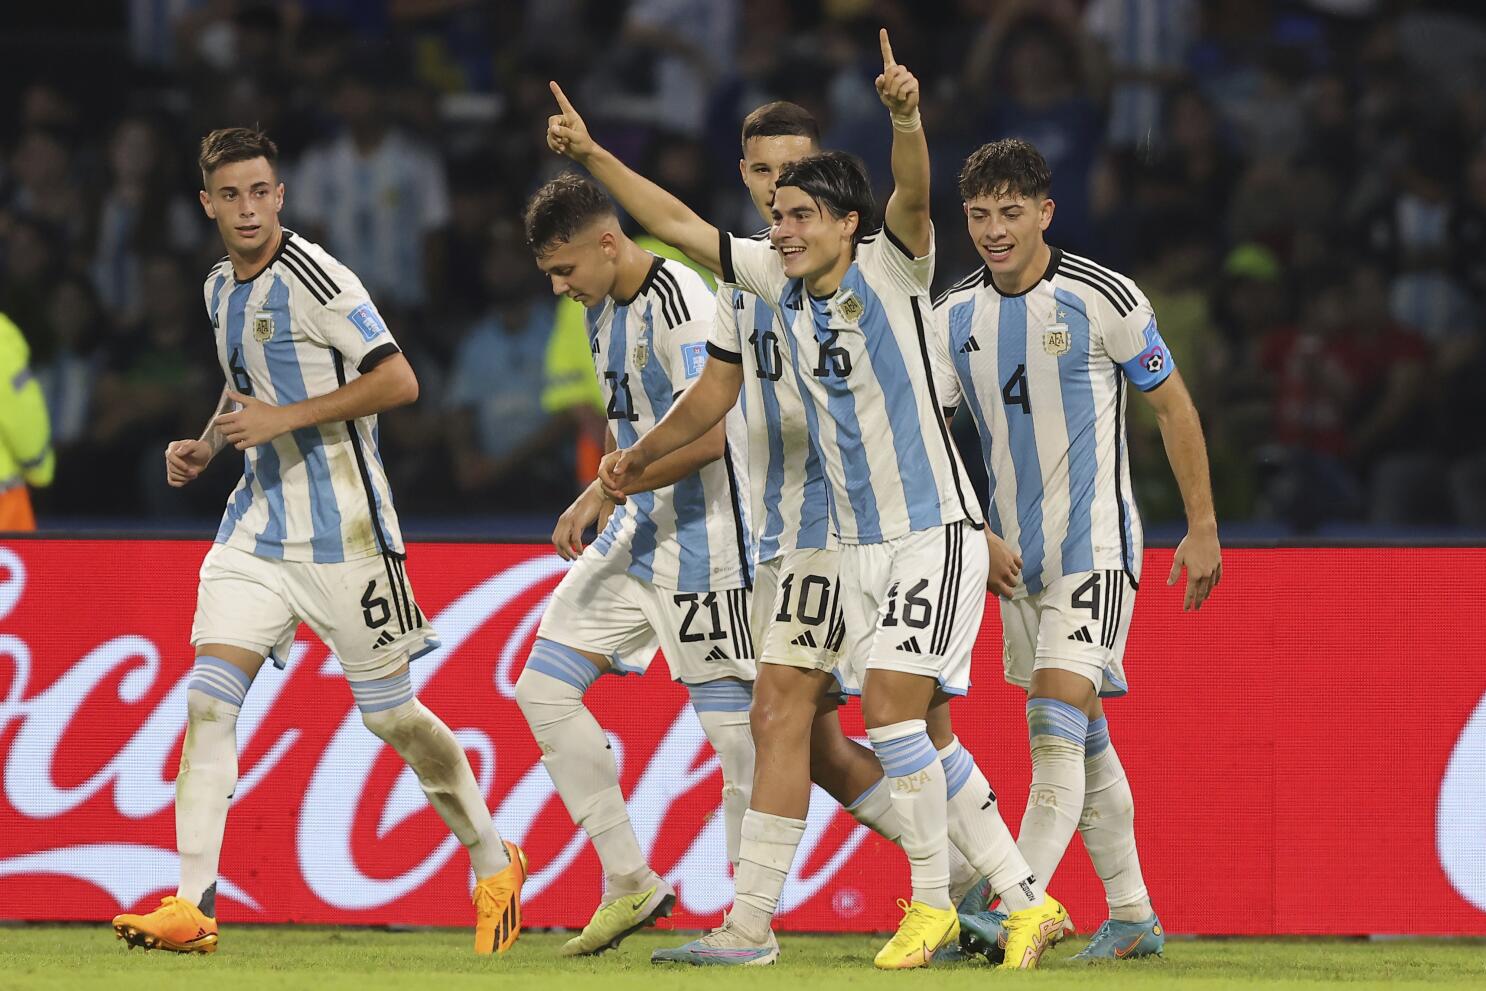 Argentina - CA Tigre Reserve - Results, fixtures, squad, statistics,  photos, videos and news - Soccerway